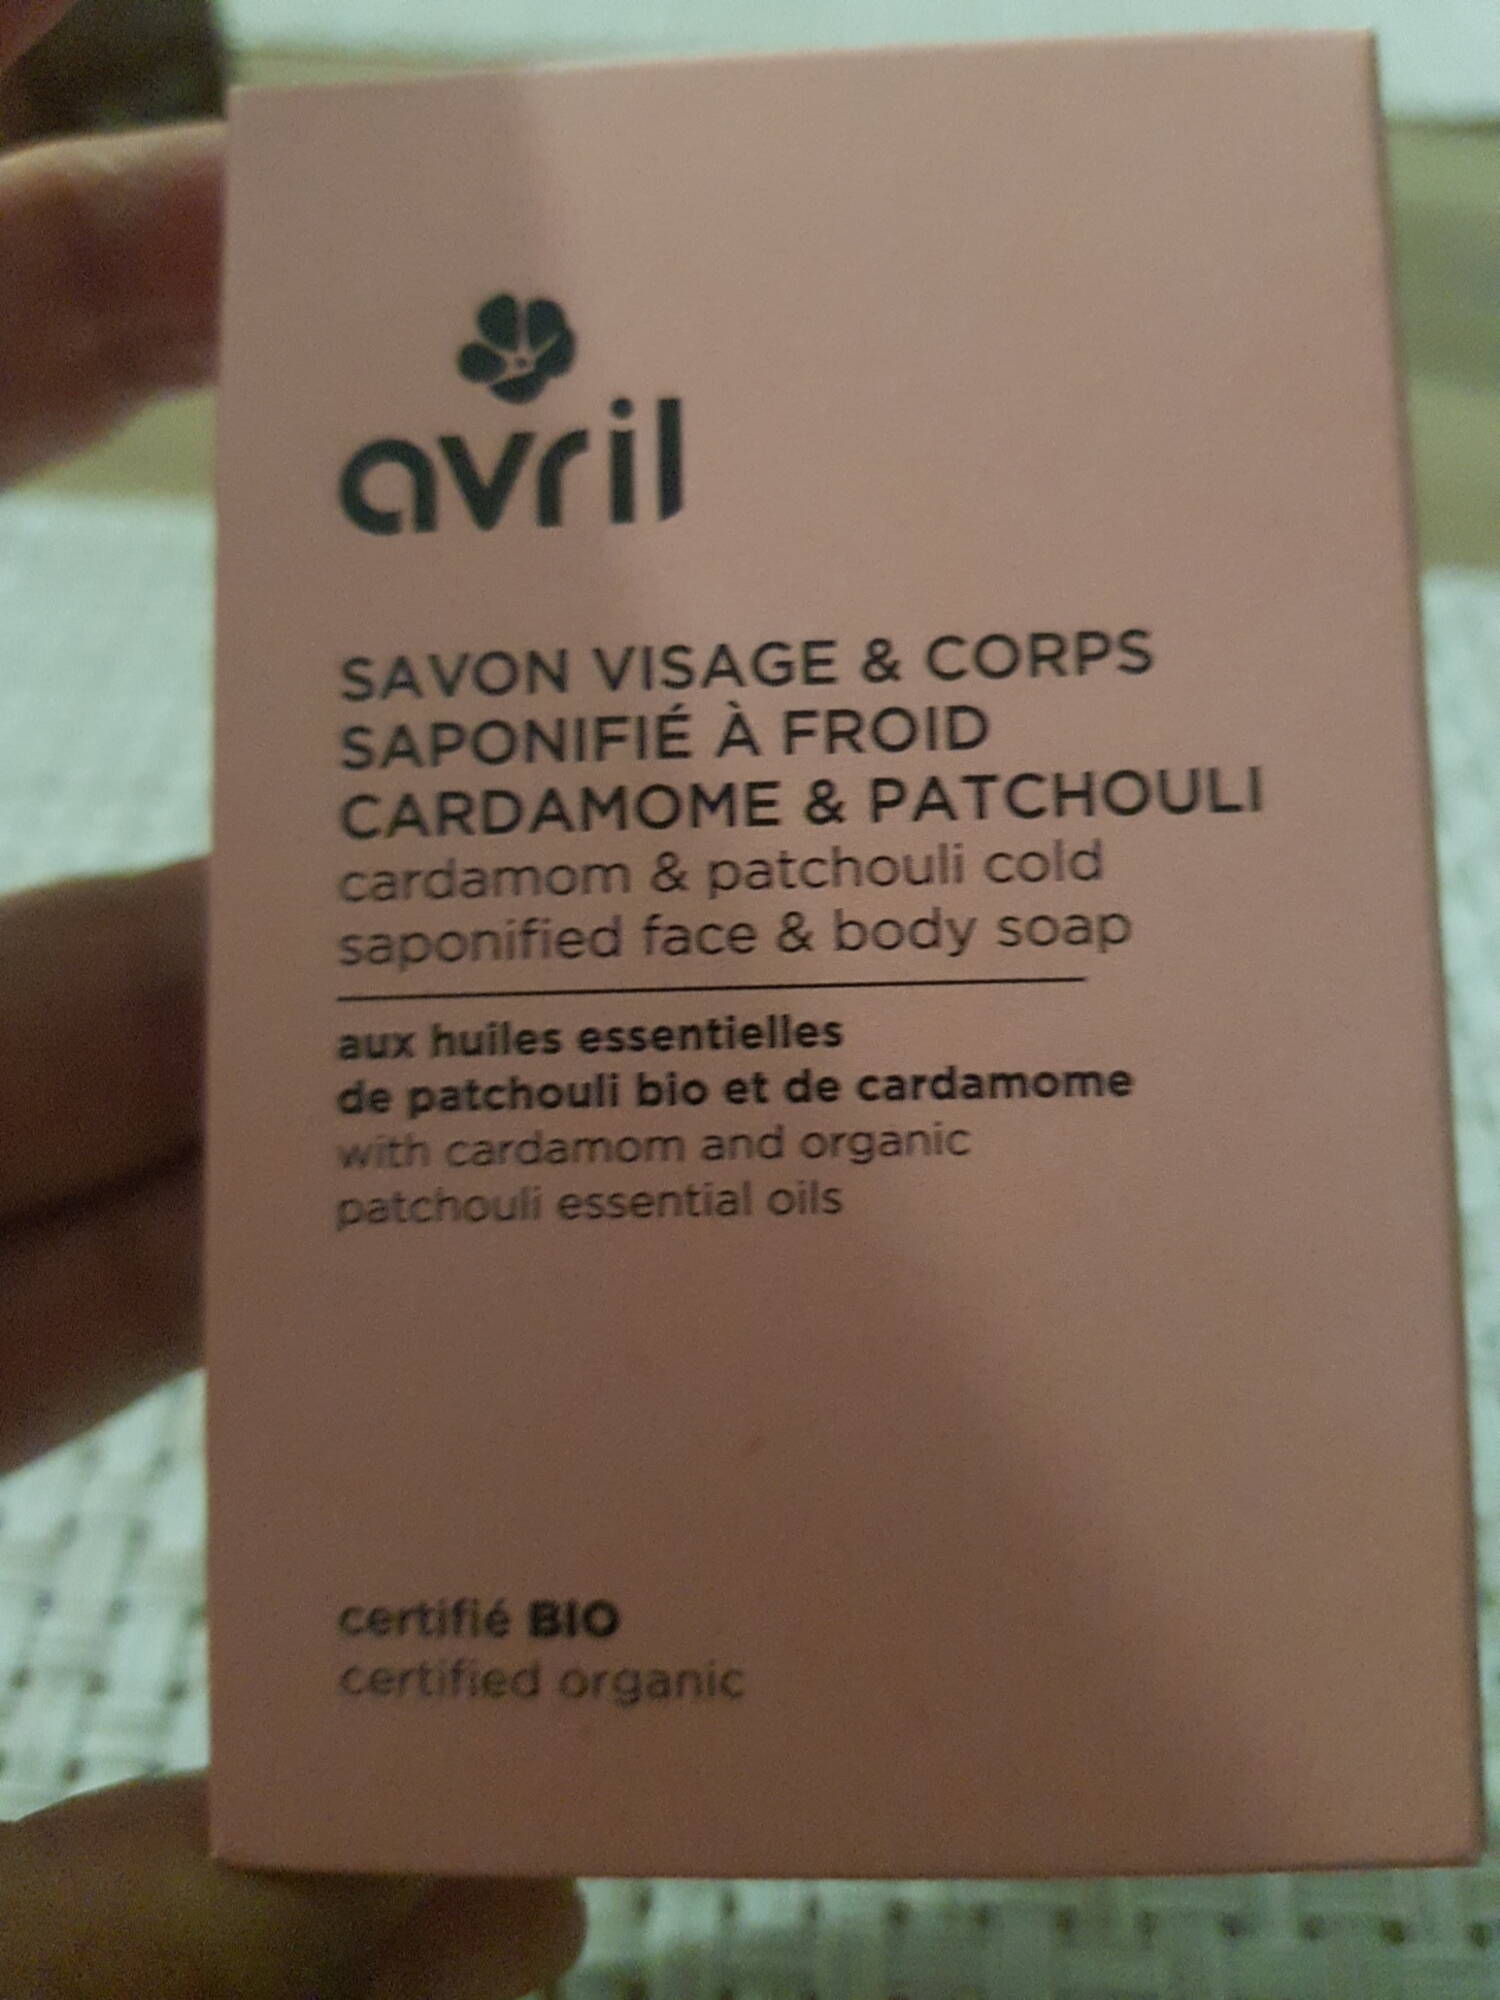 AVRIL - Cardamome & Patchouli - Savon visage & corps